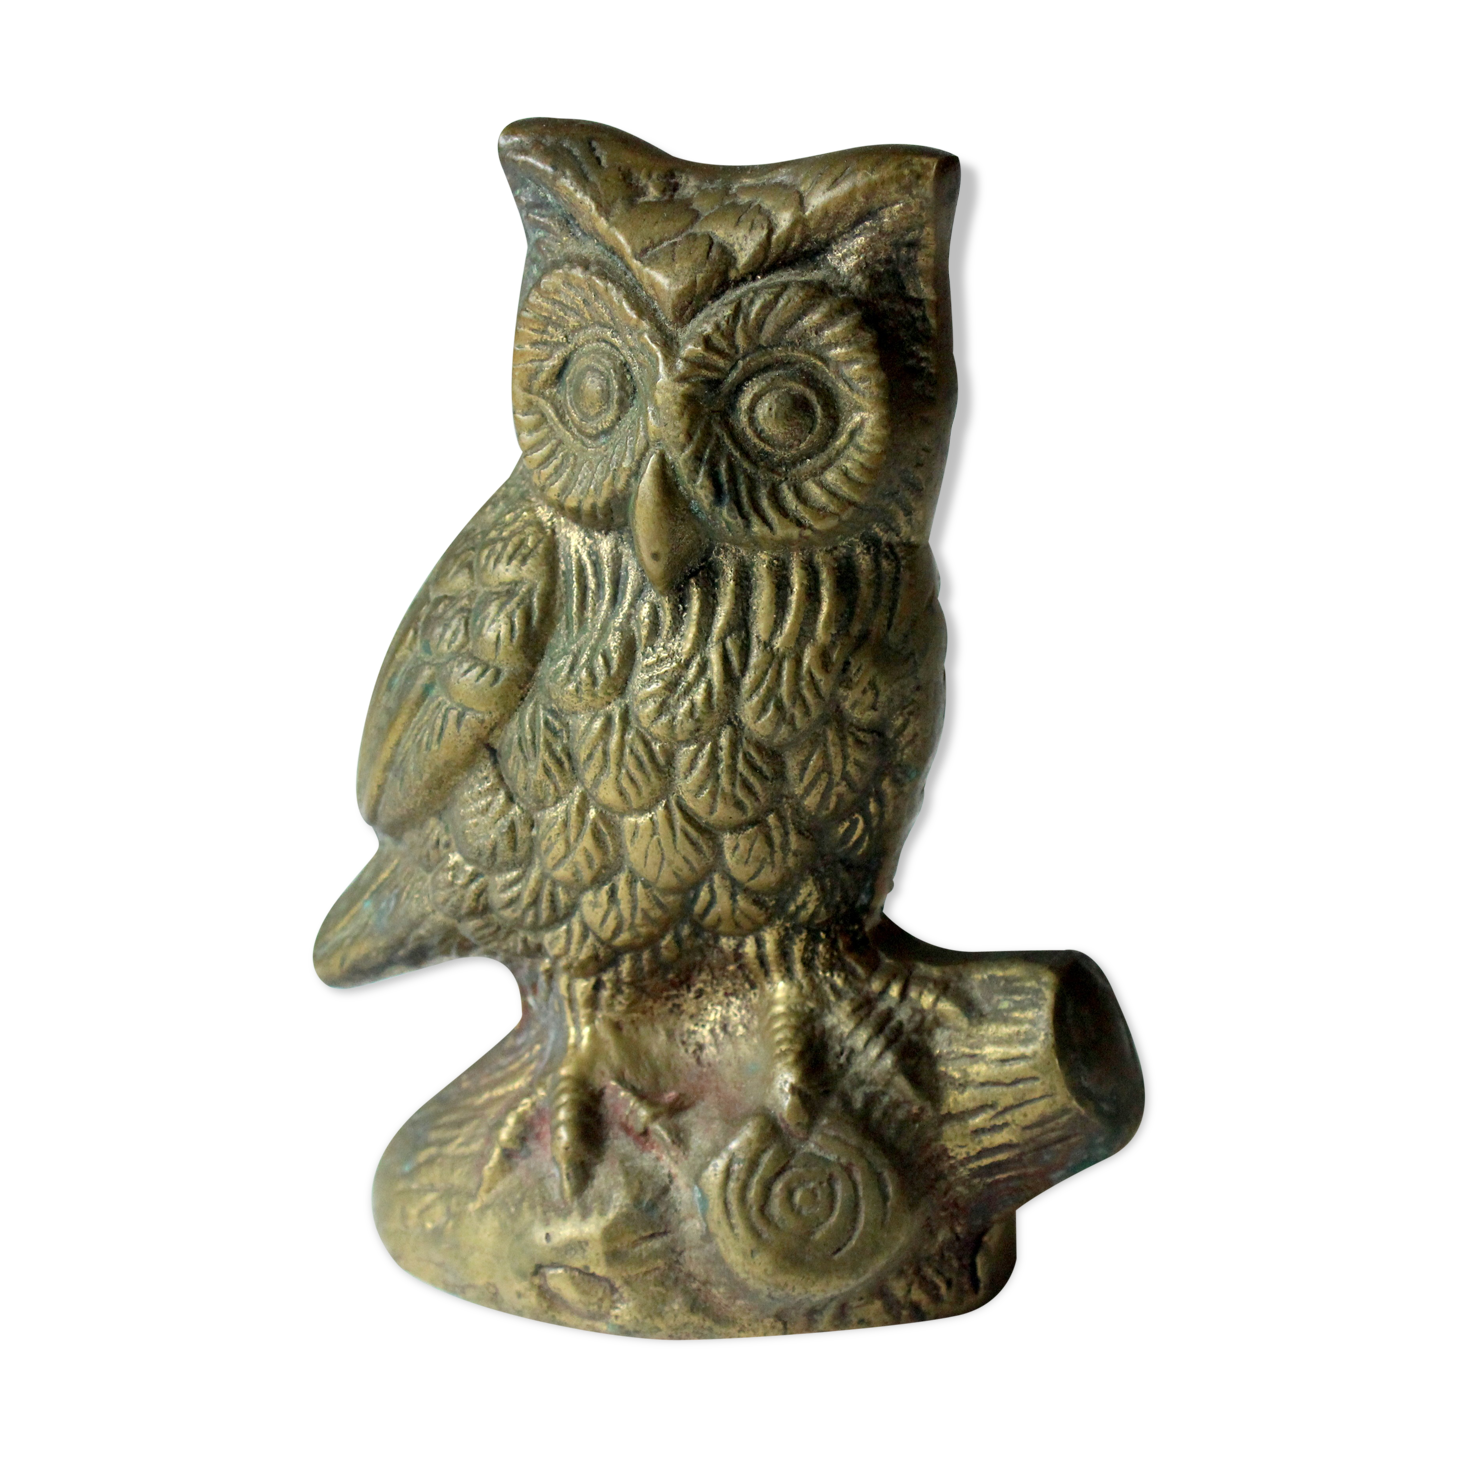 Vintage Brass Owl Paperweight